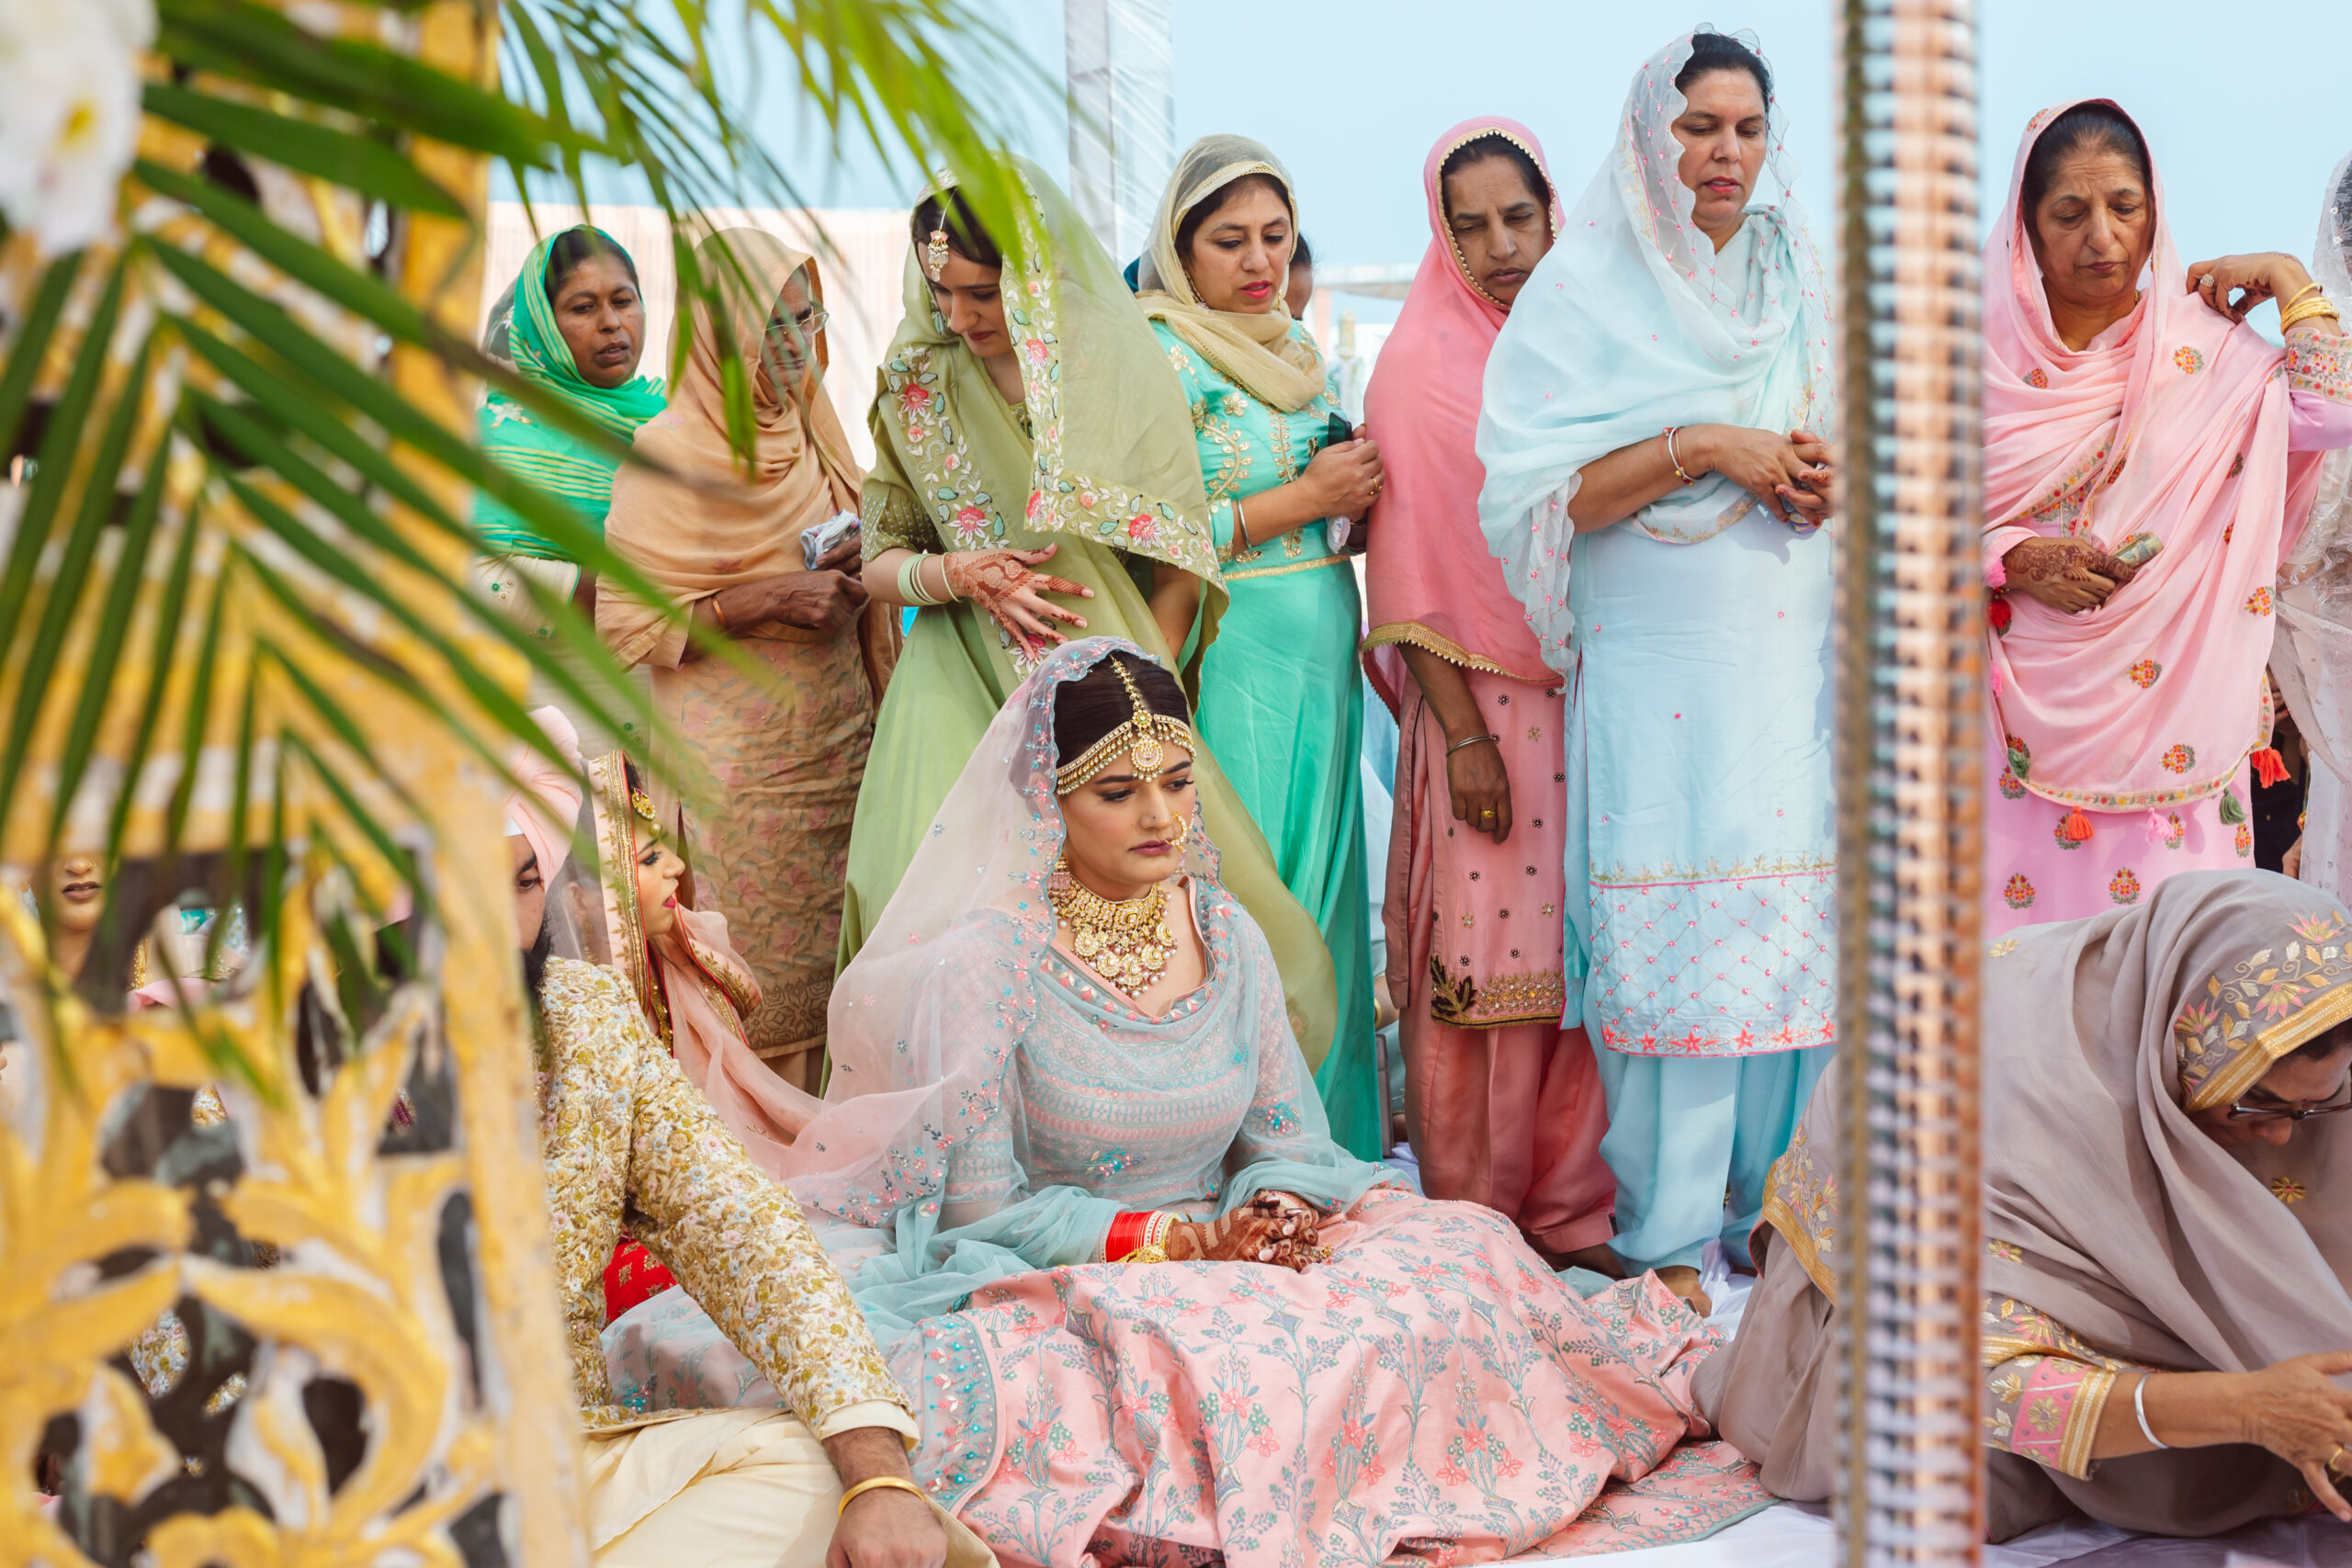 Indian Pre wedding Photo Shoot Ideas | Funny Pre wedding Photo Poses -  YouTube